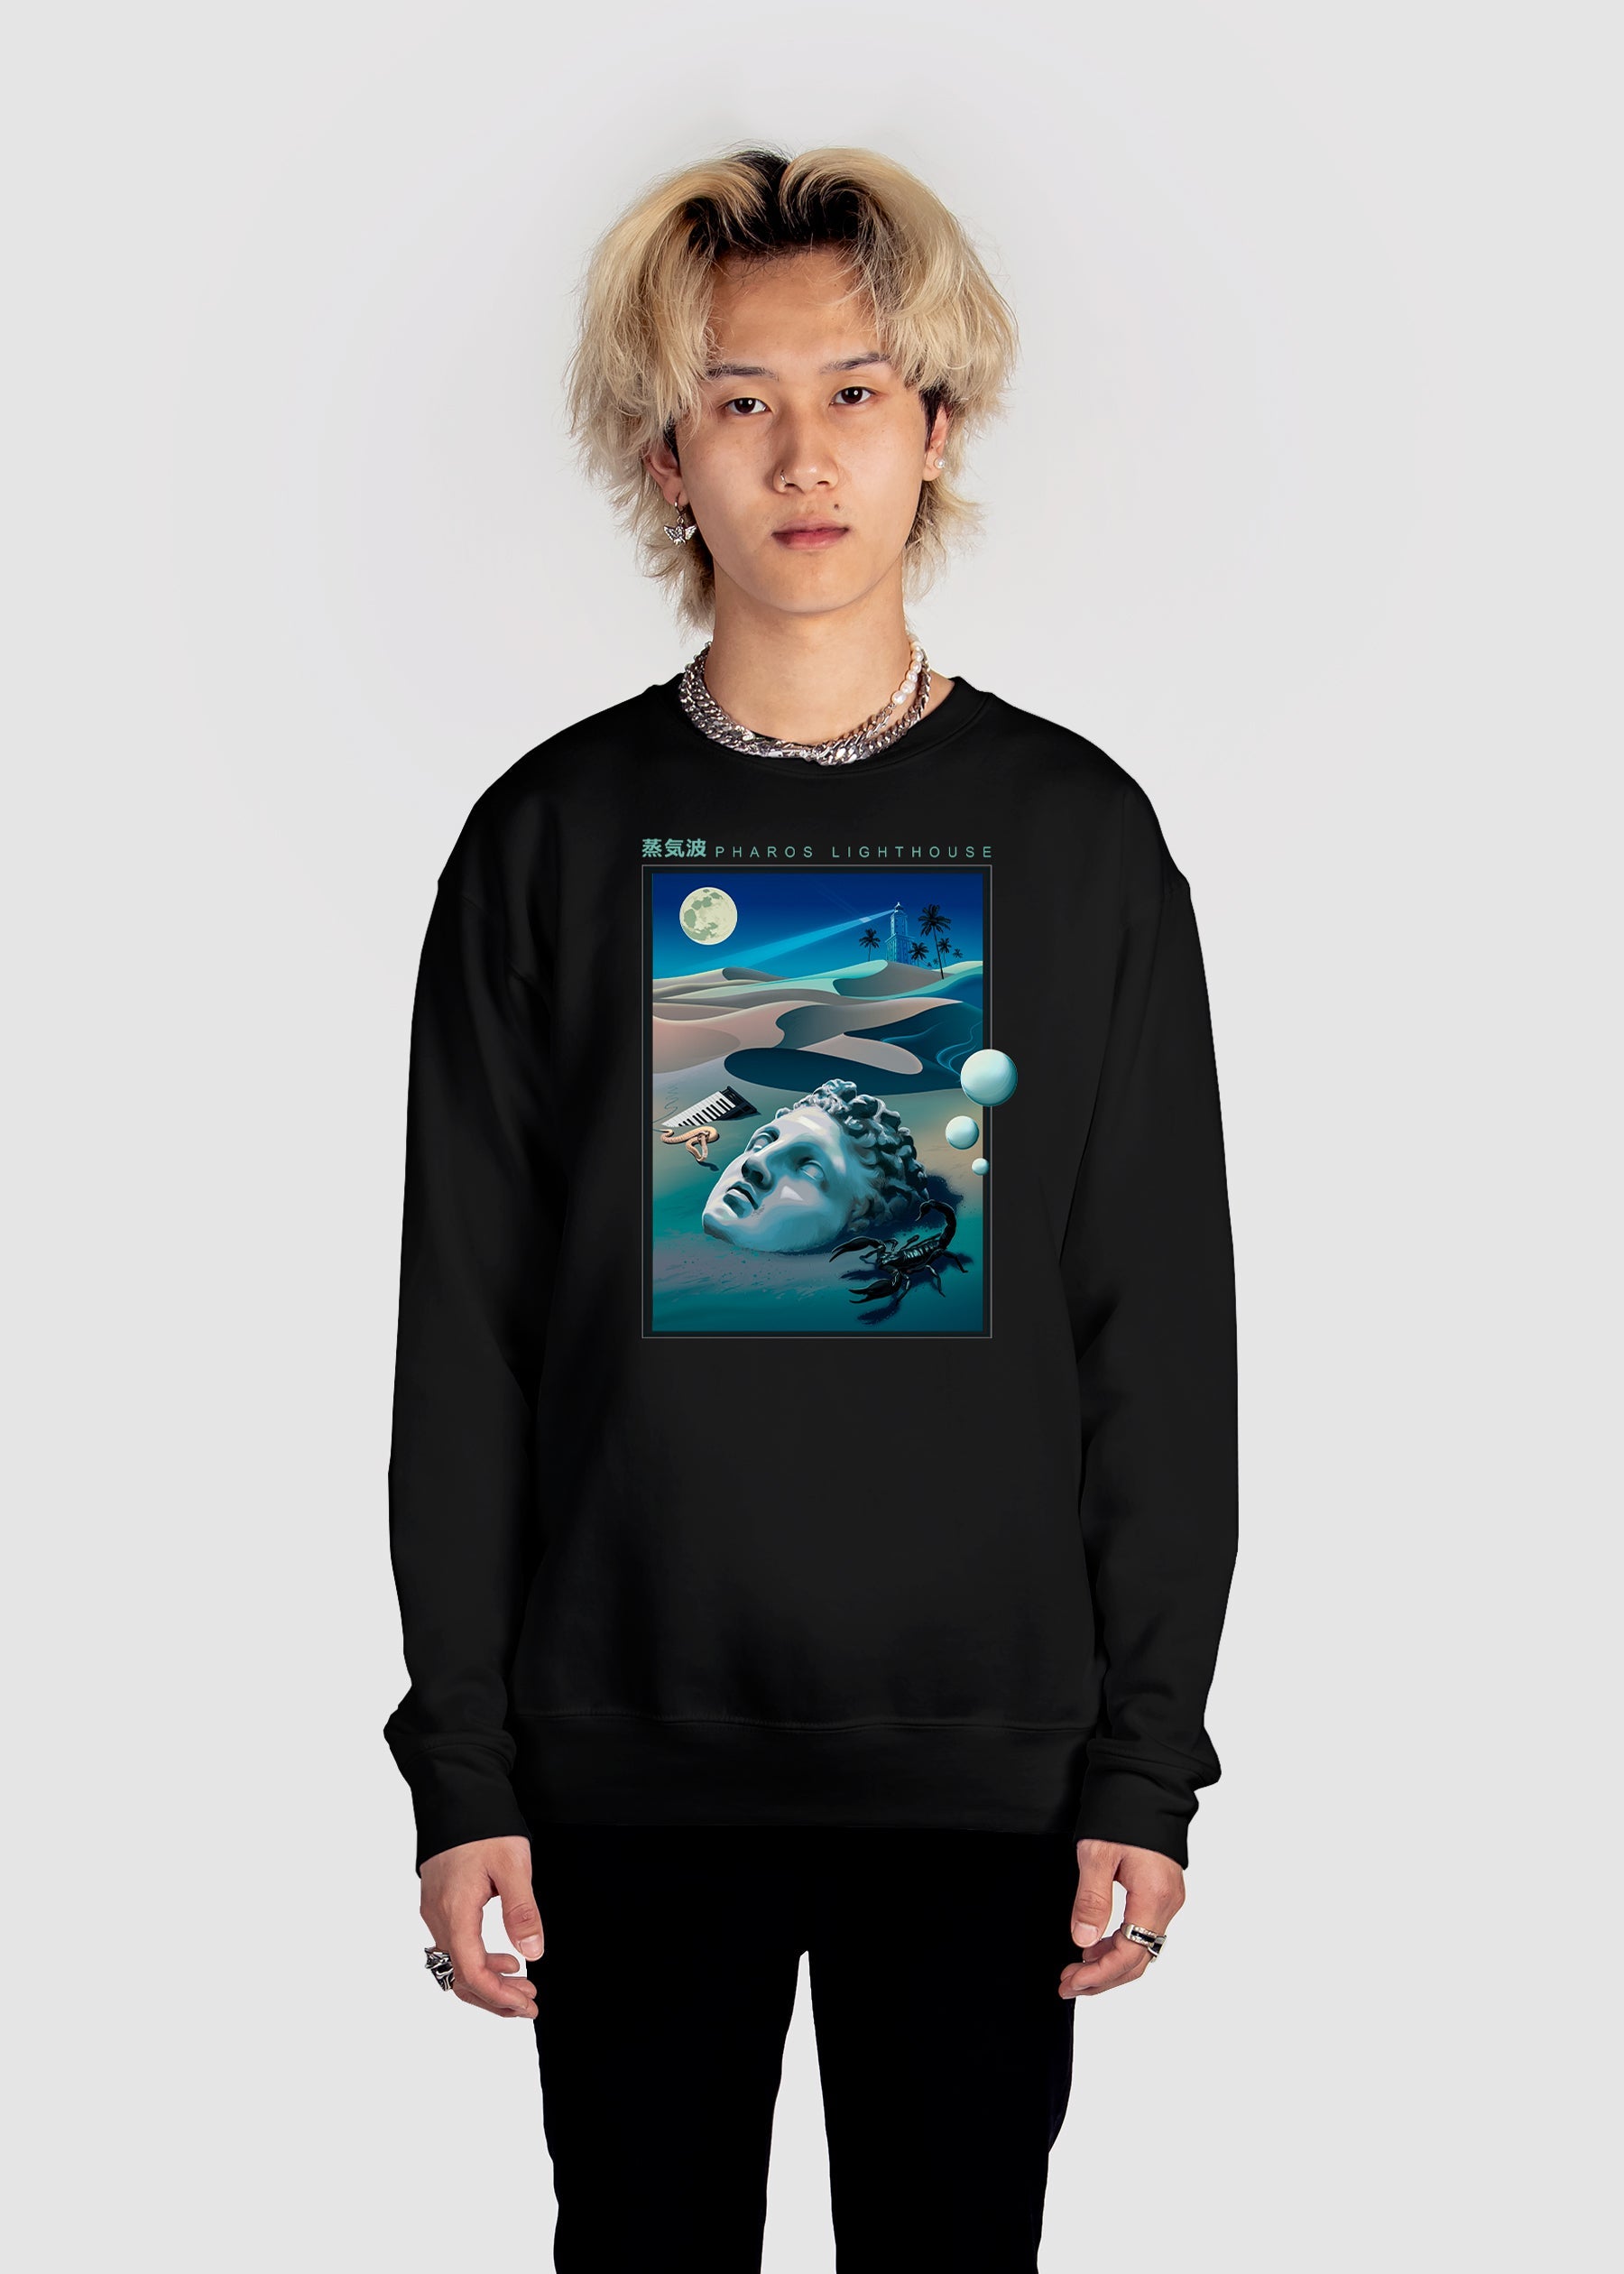 Pharos Lighthouse Sweatshirt Graphic Sweatshirt DTG Black S 